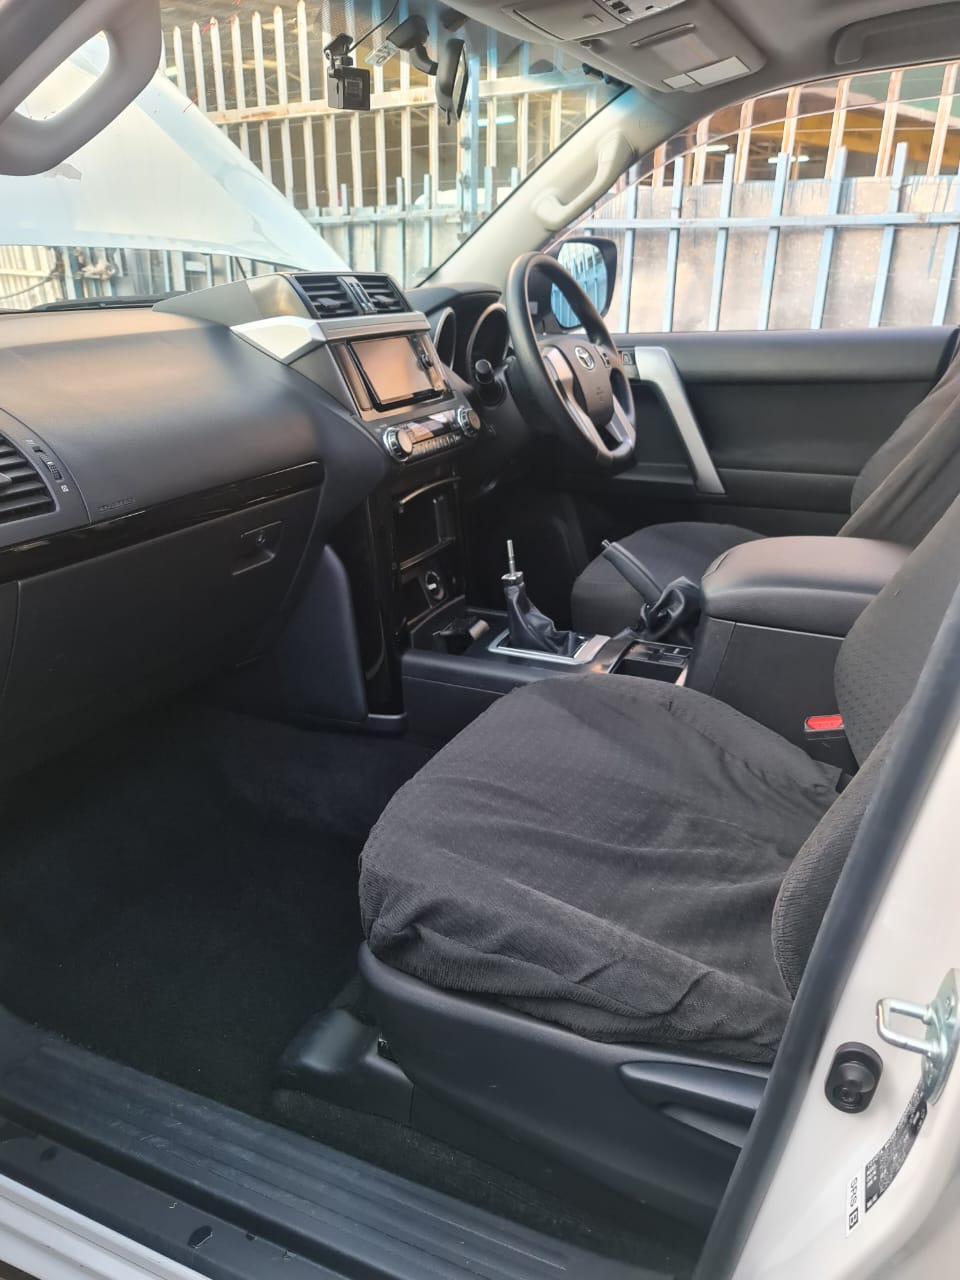 2017 Toyota Prado Sunroof 7 Seater Trade in OK NEW